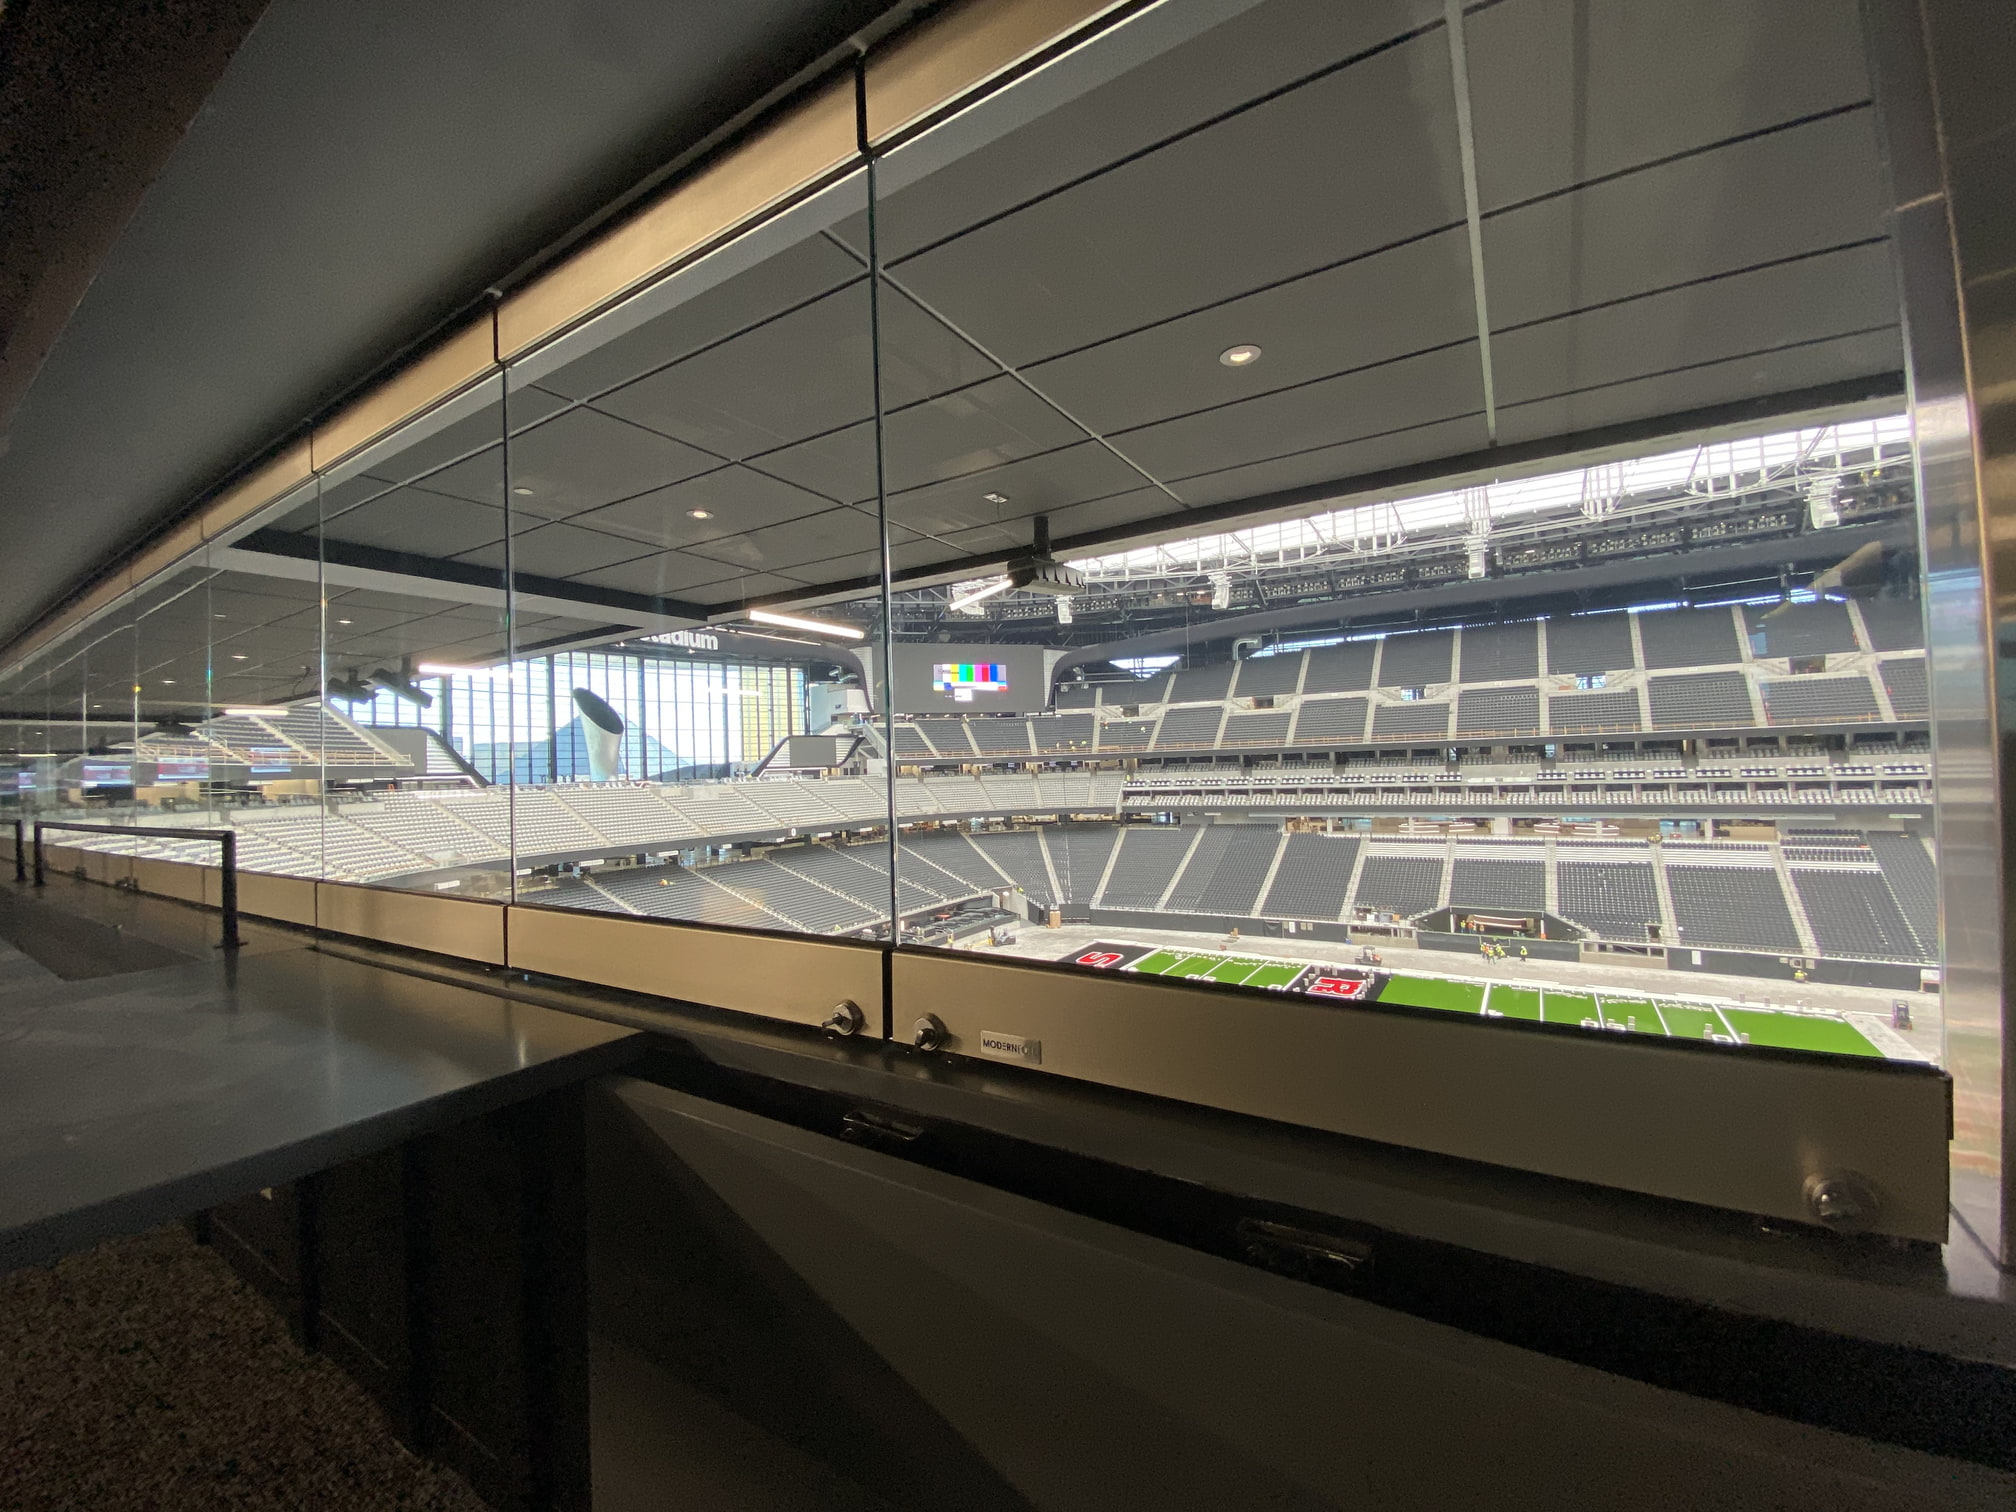 Raiders Stadium_PureViewPlus_Sunstone (2020)